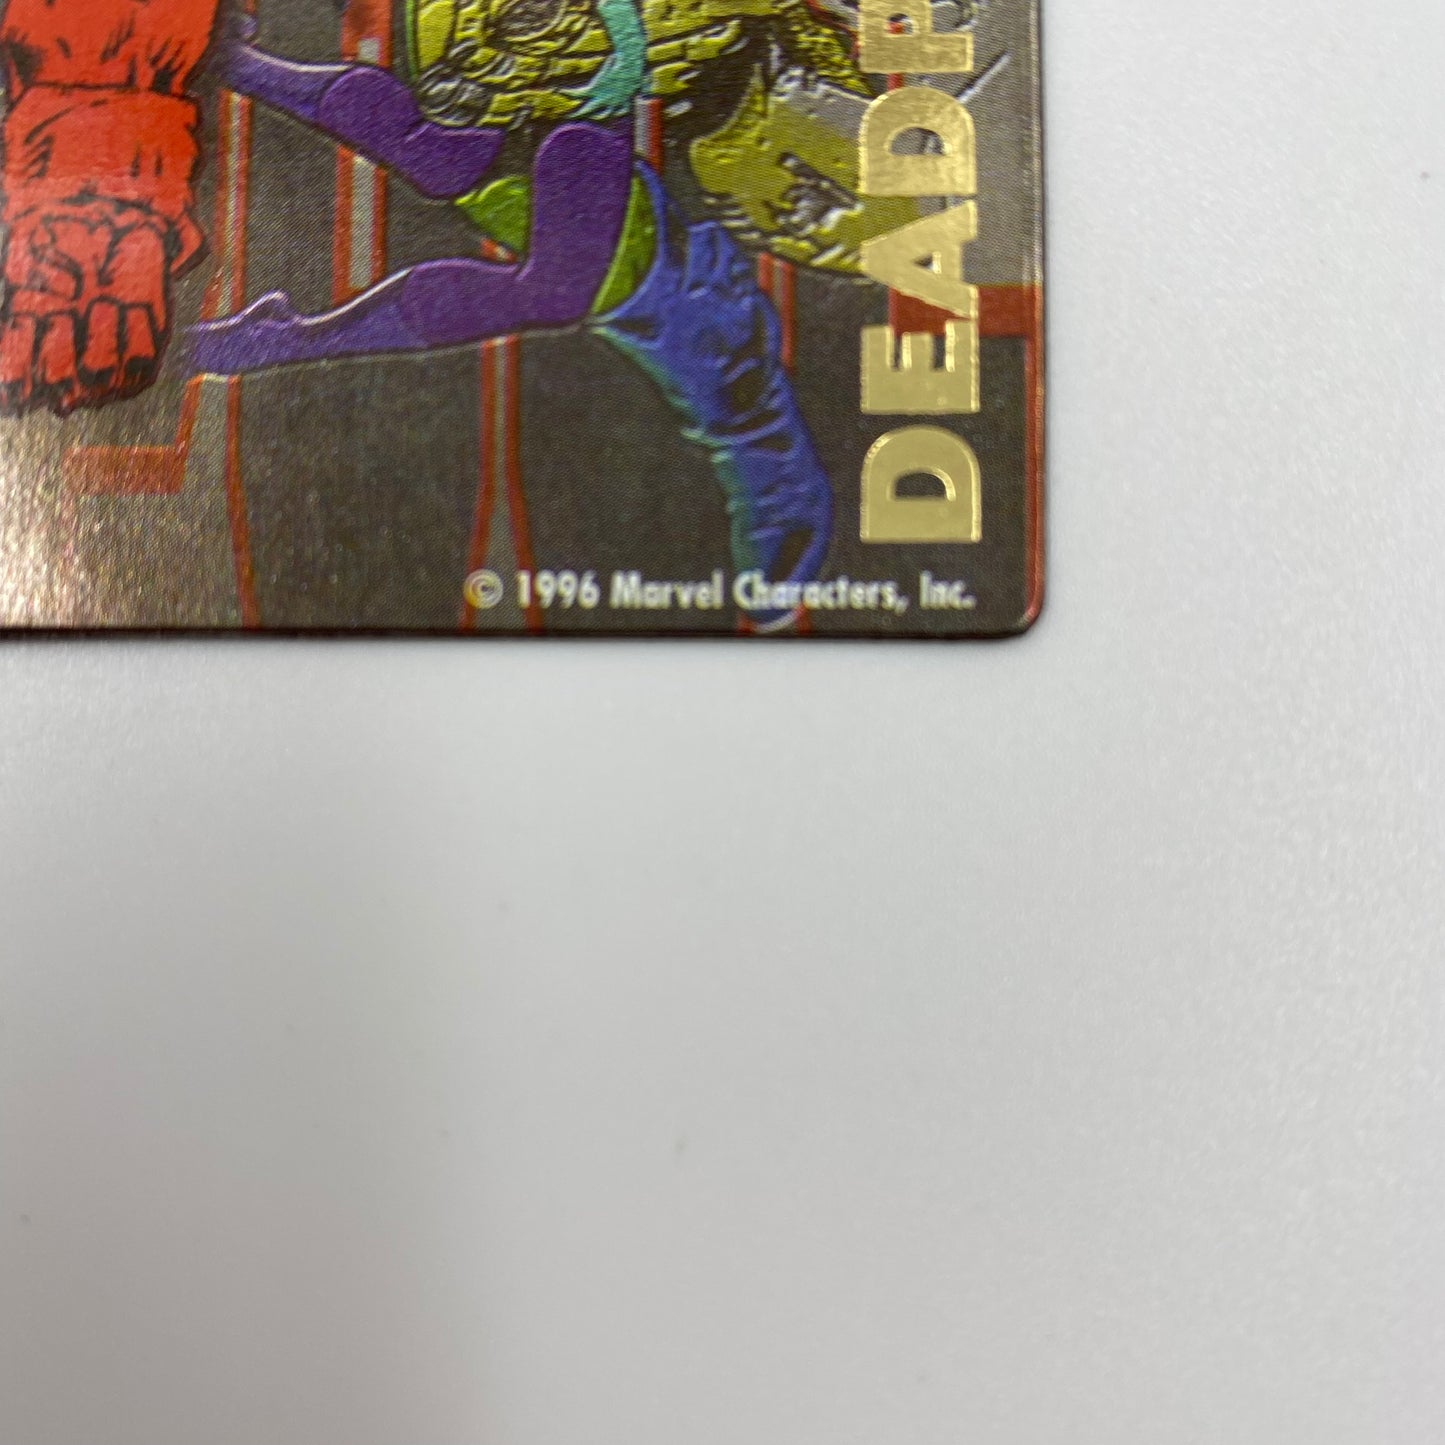 Marvel Comics Super Heroes Magnets Deadpool magnet (1996)